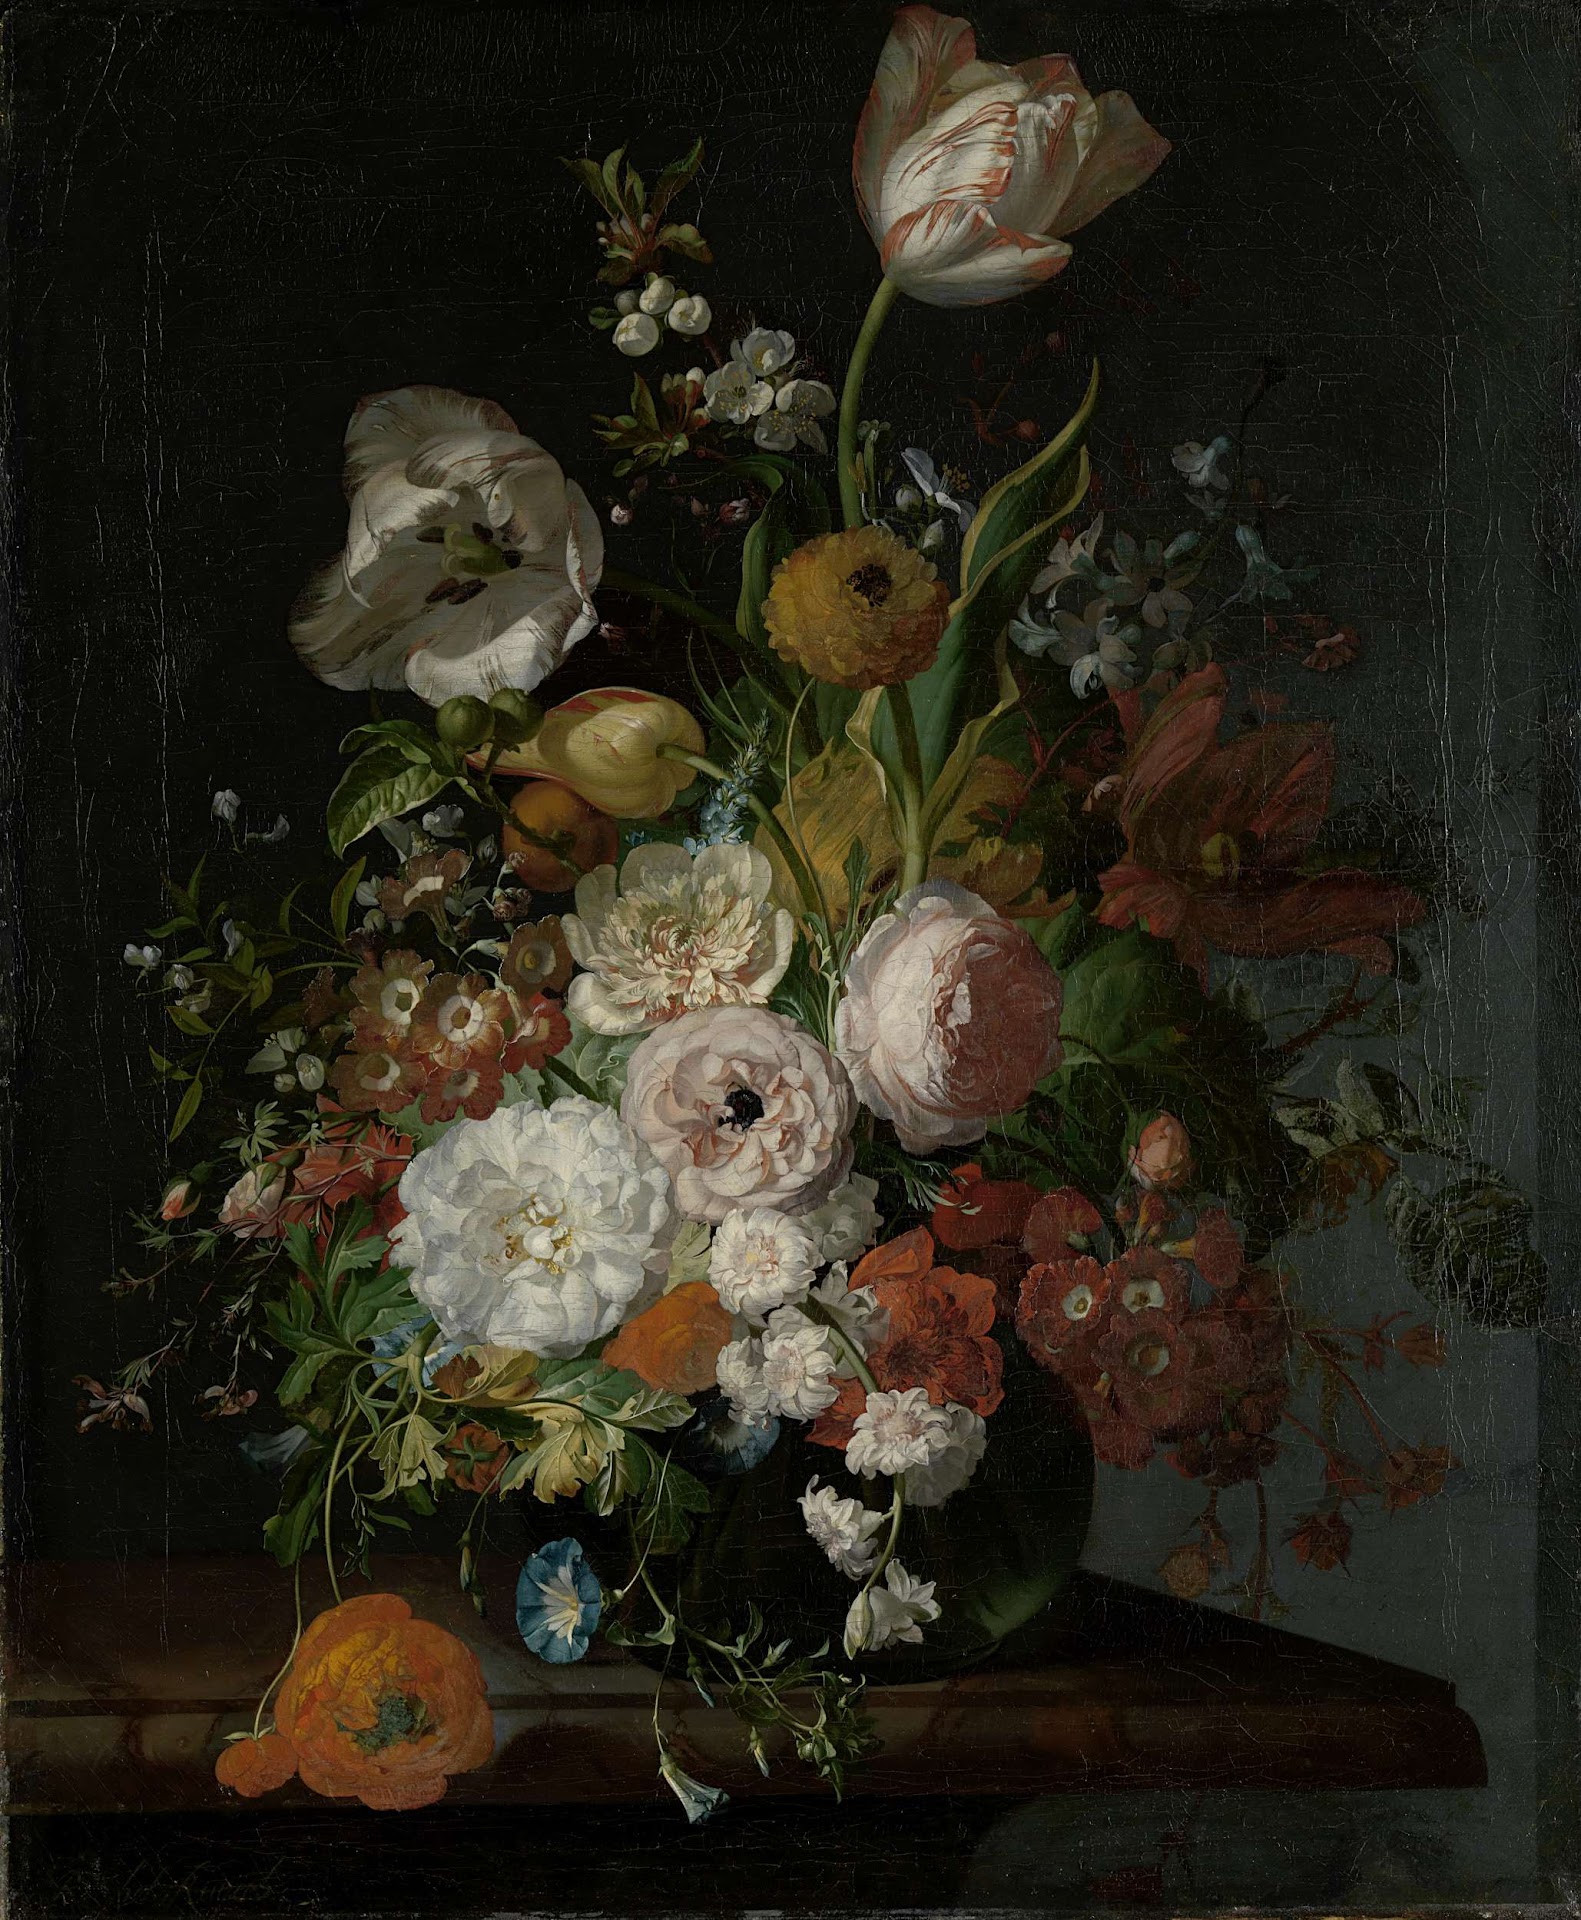 Glass Rachel - Life Flowers Rijksmuseum c. with in 1720 a Ruysch, - c. Vase, 1690 Still